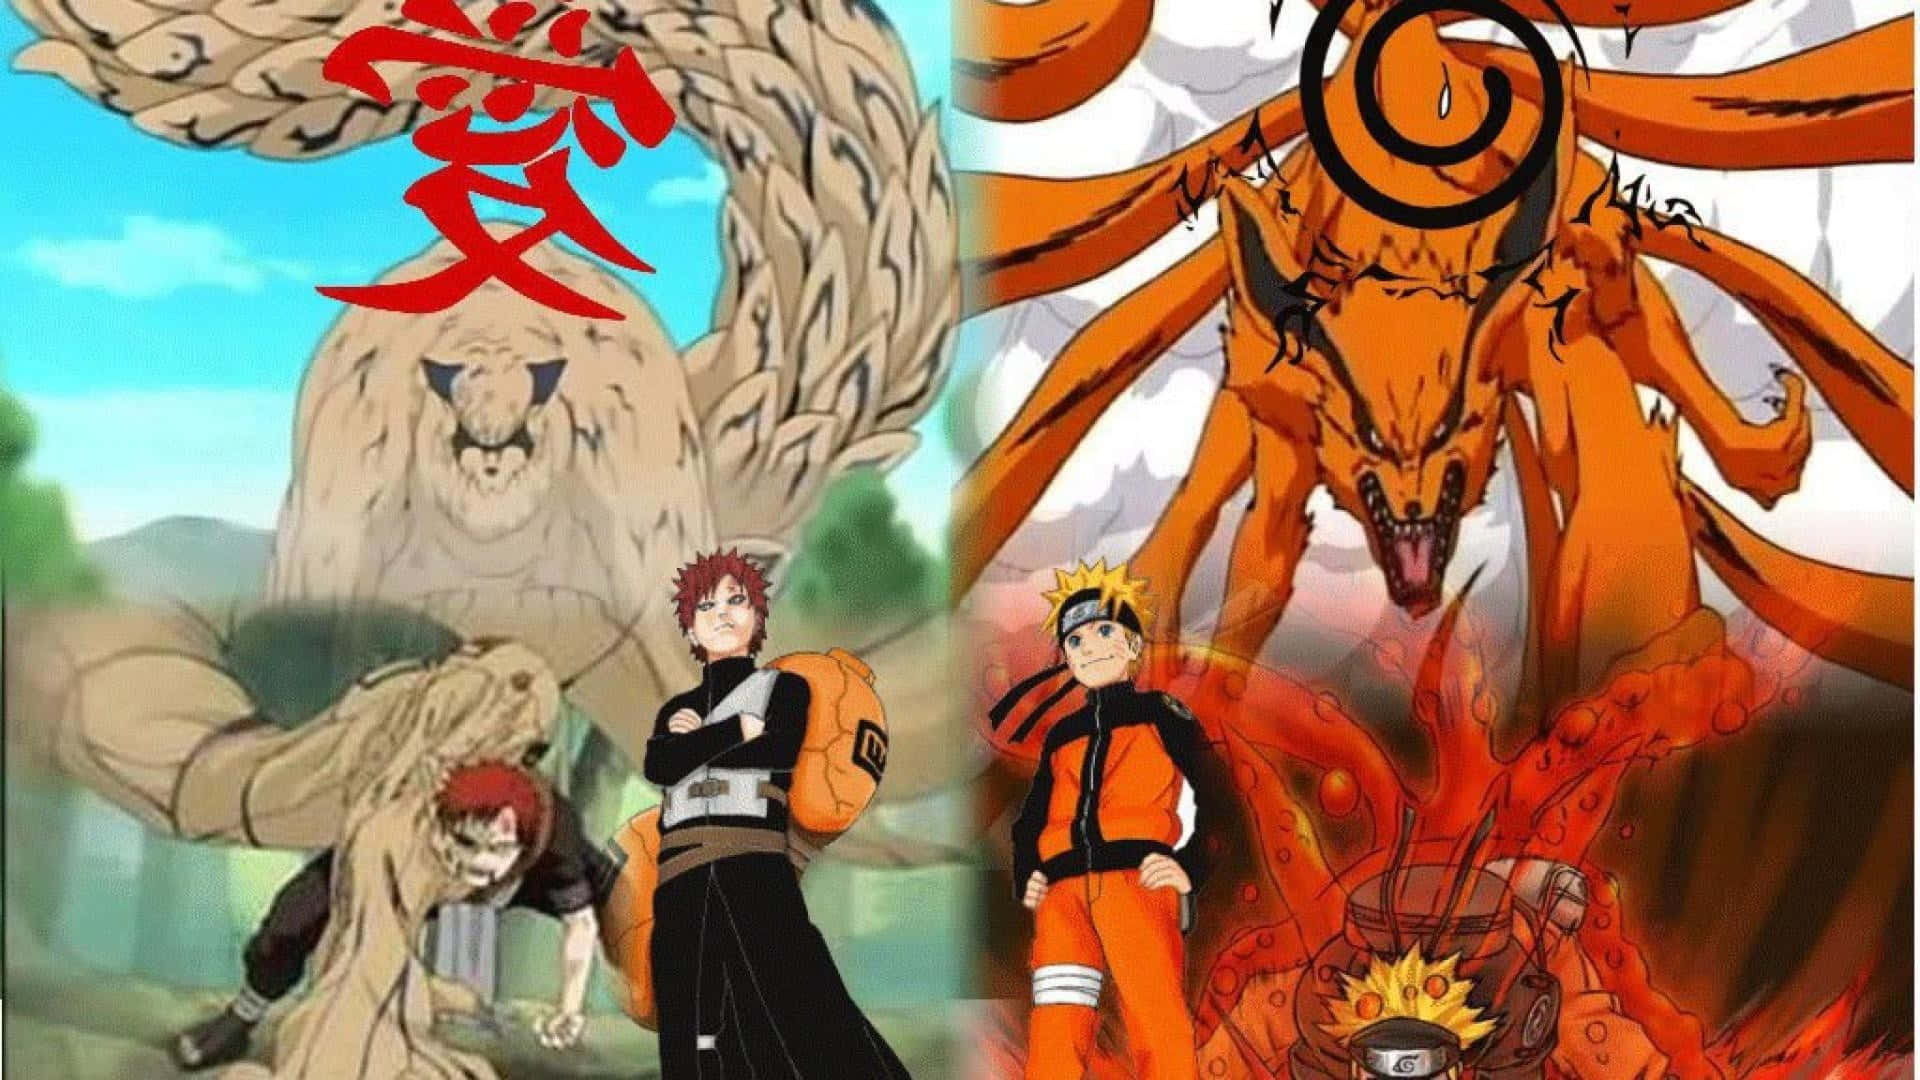 HD wallpaper: Naruto Gaara wallpaper, Anime